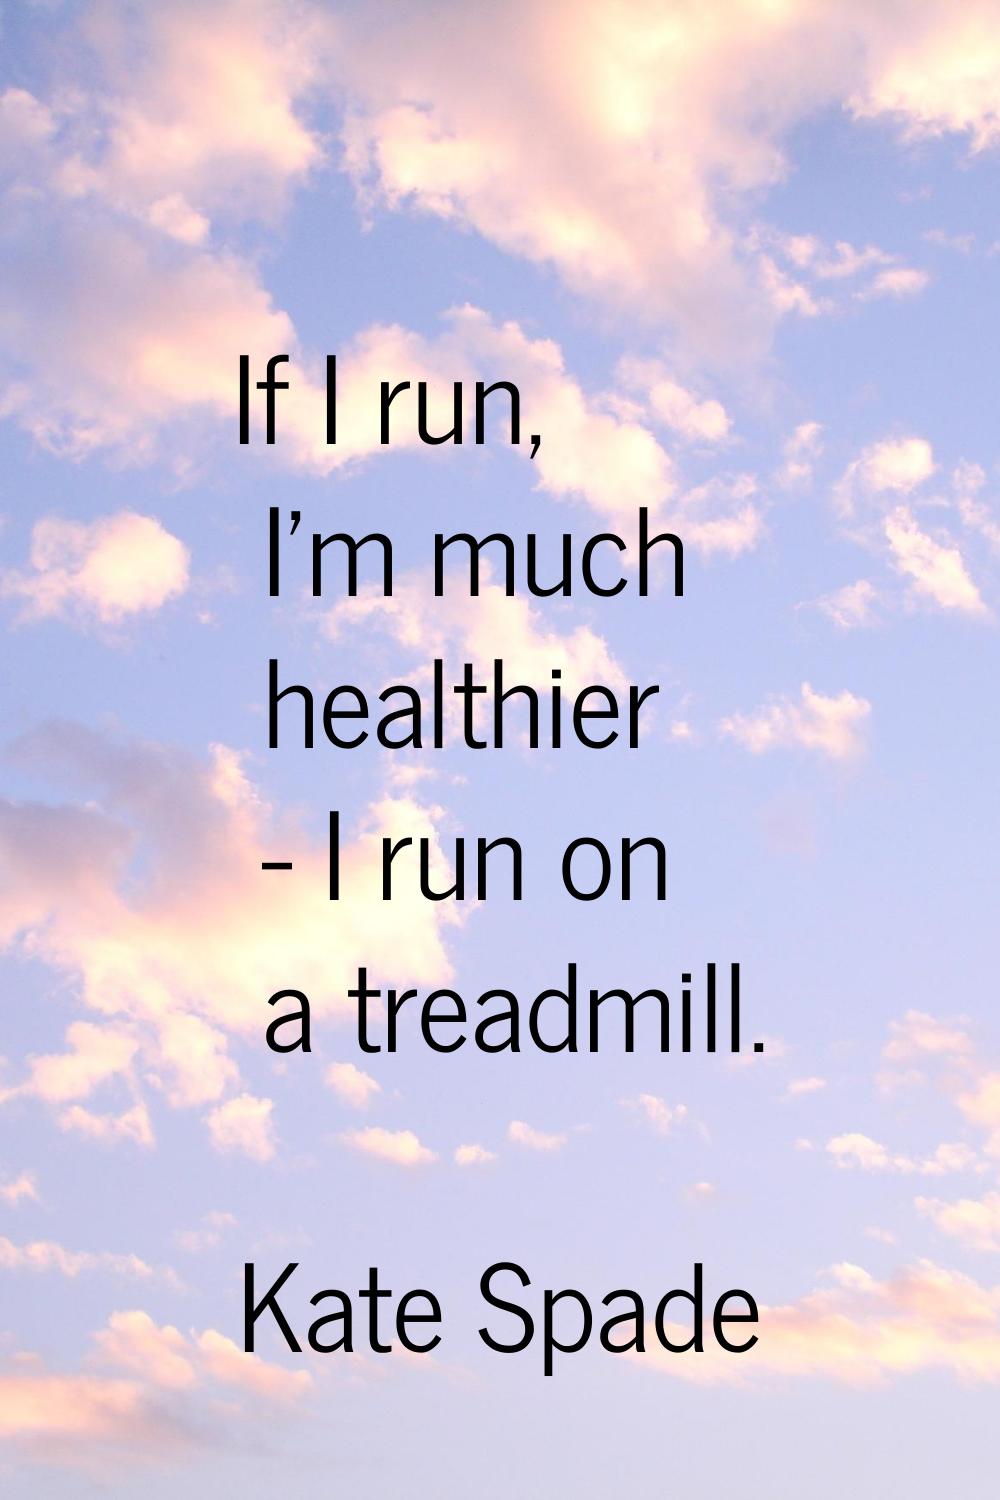 If I run, I'm much healthier - I run on a treadmill.